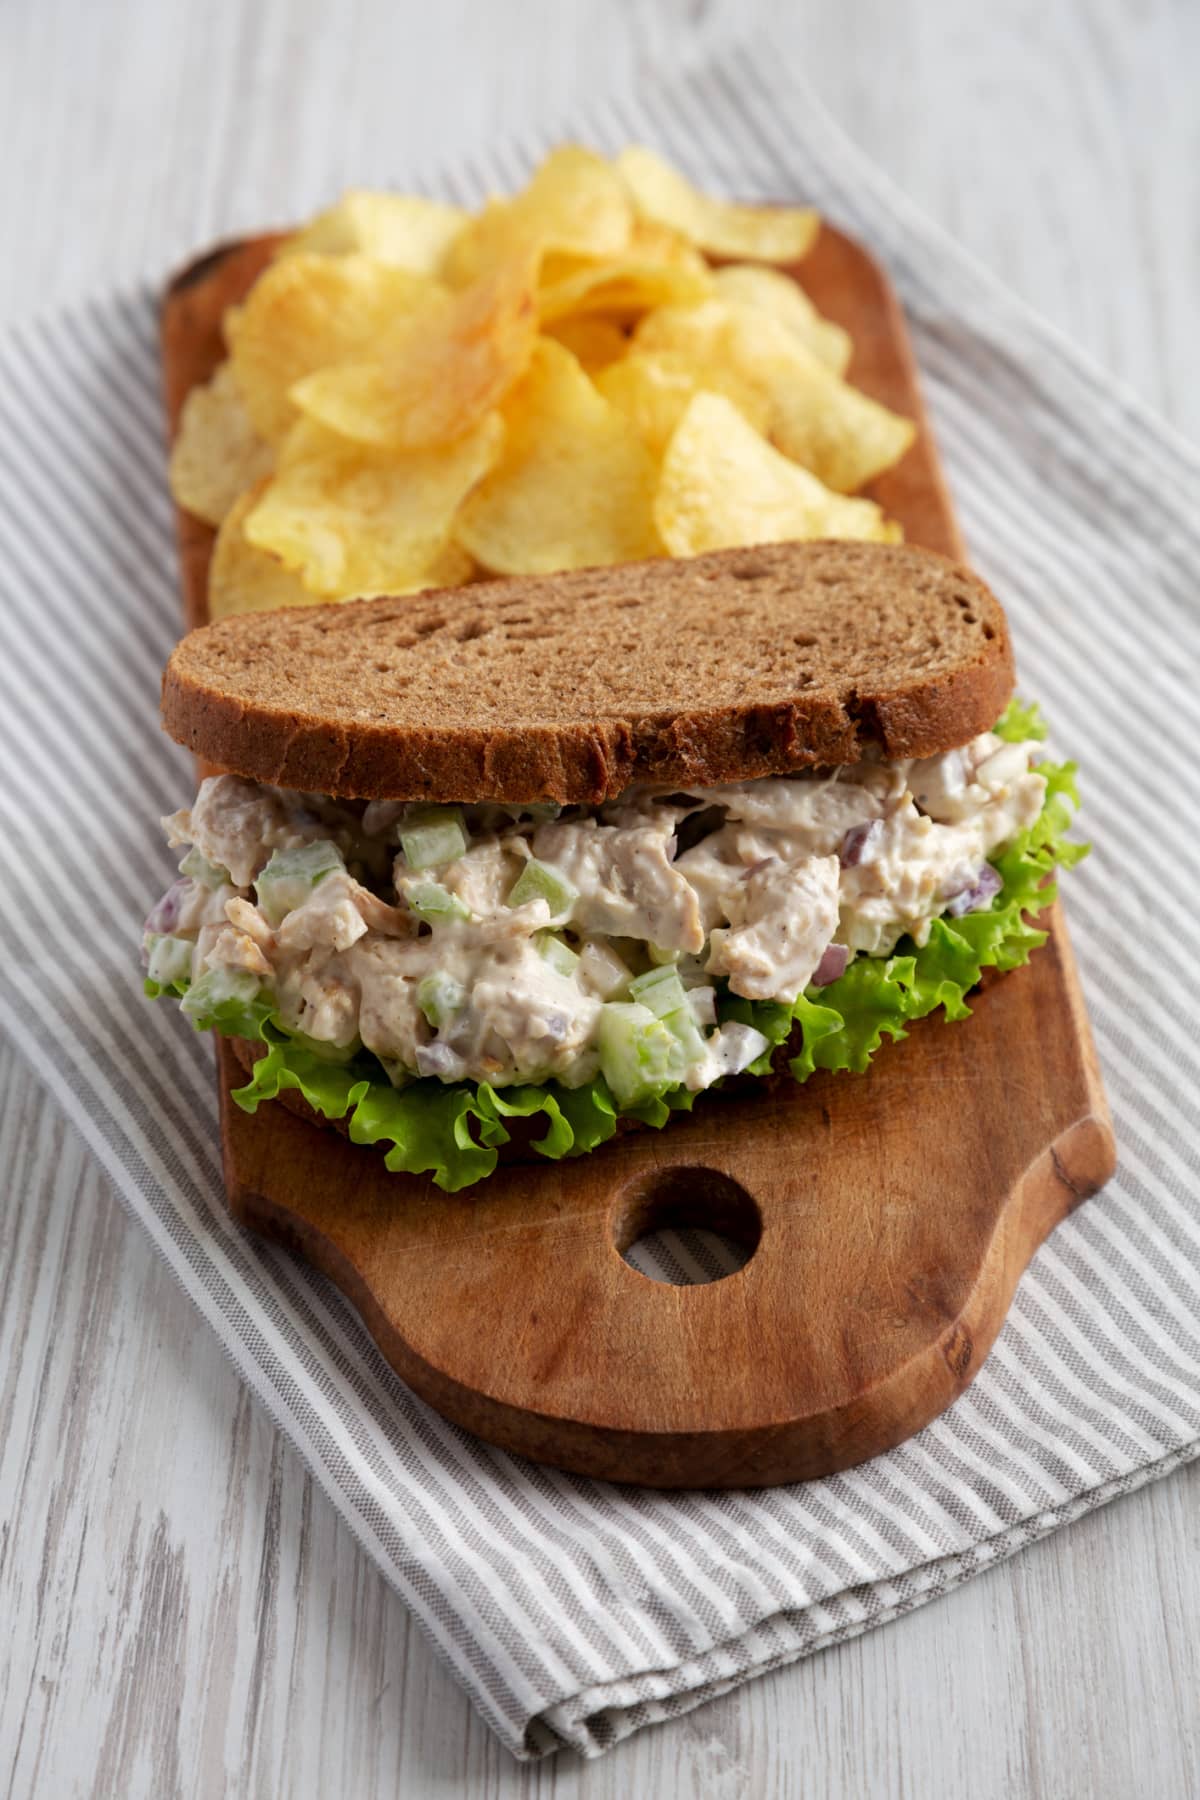 Homemade chicken salad sandwich with potato chips